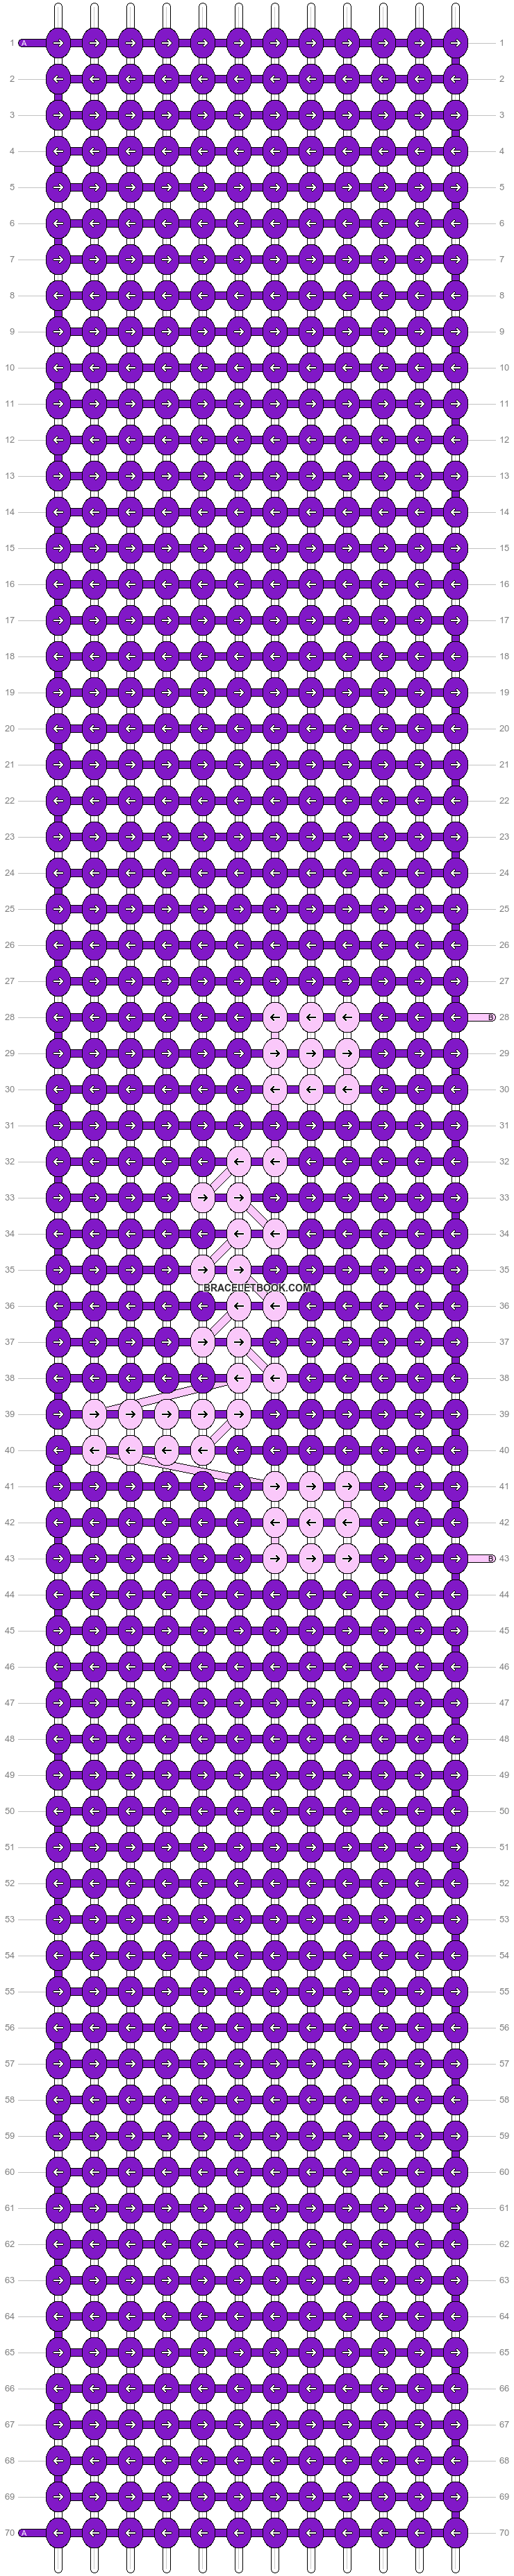 Alpha pattern #45876 variation #336138 pattern